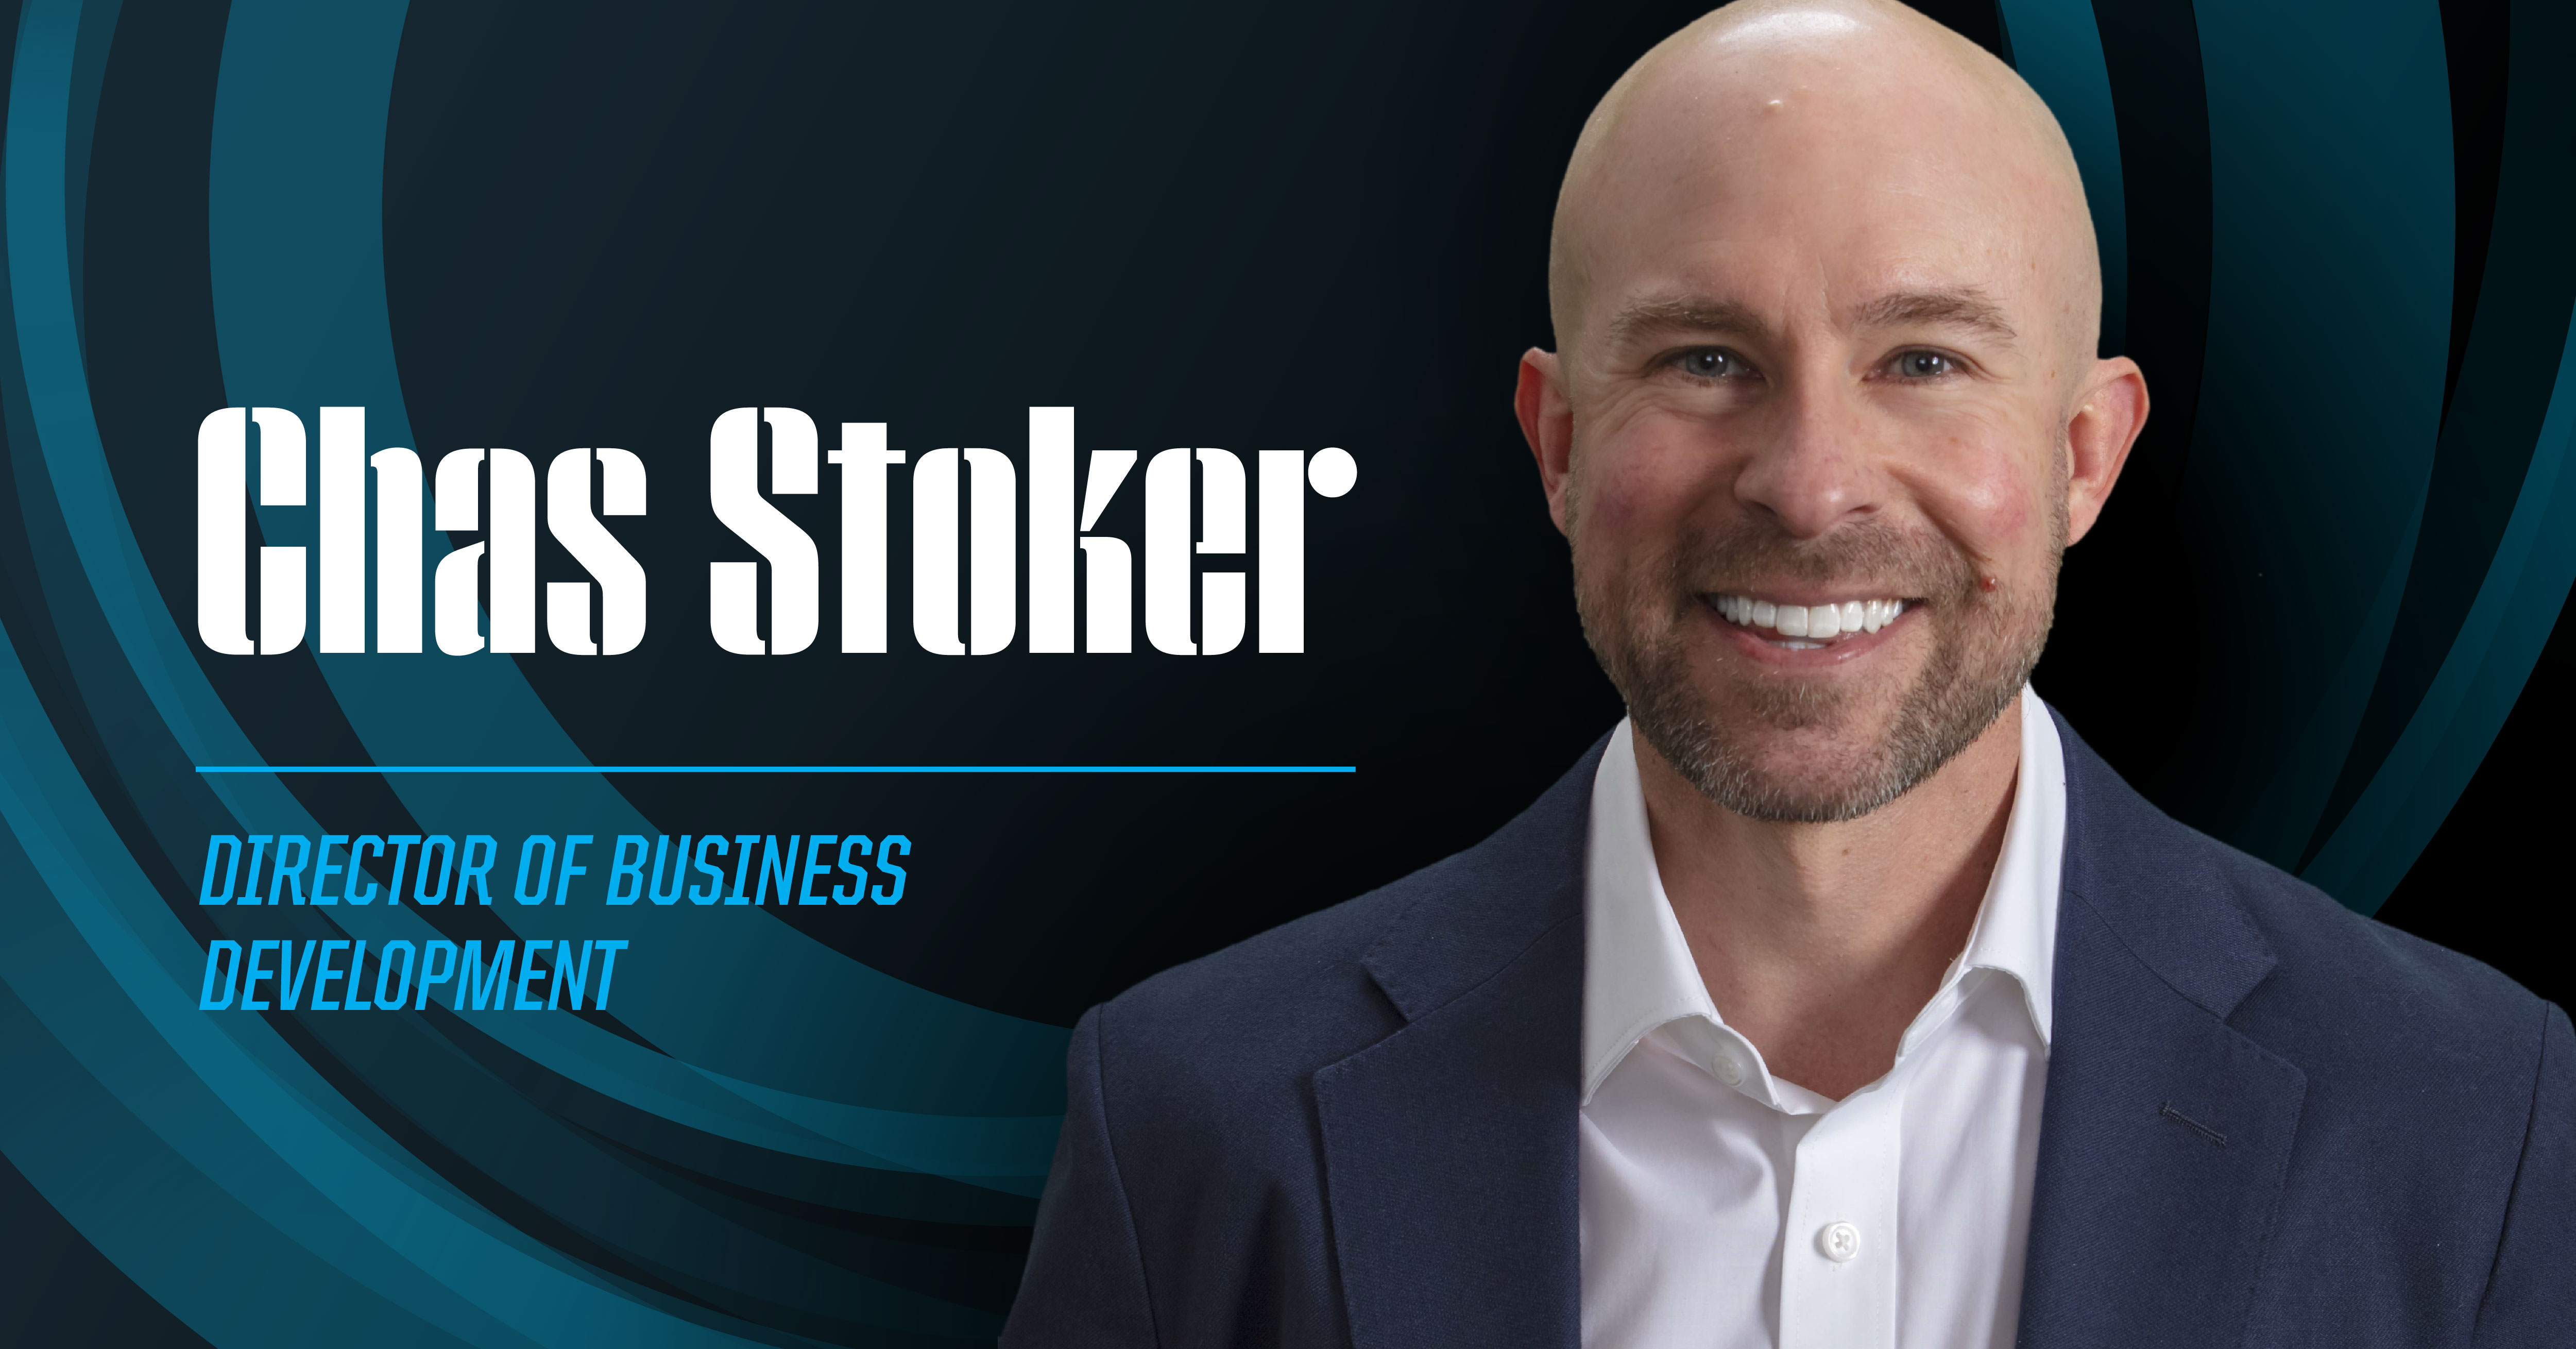 Chas Stoker: Director of Business Development.